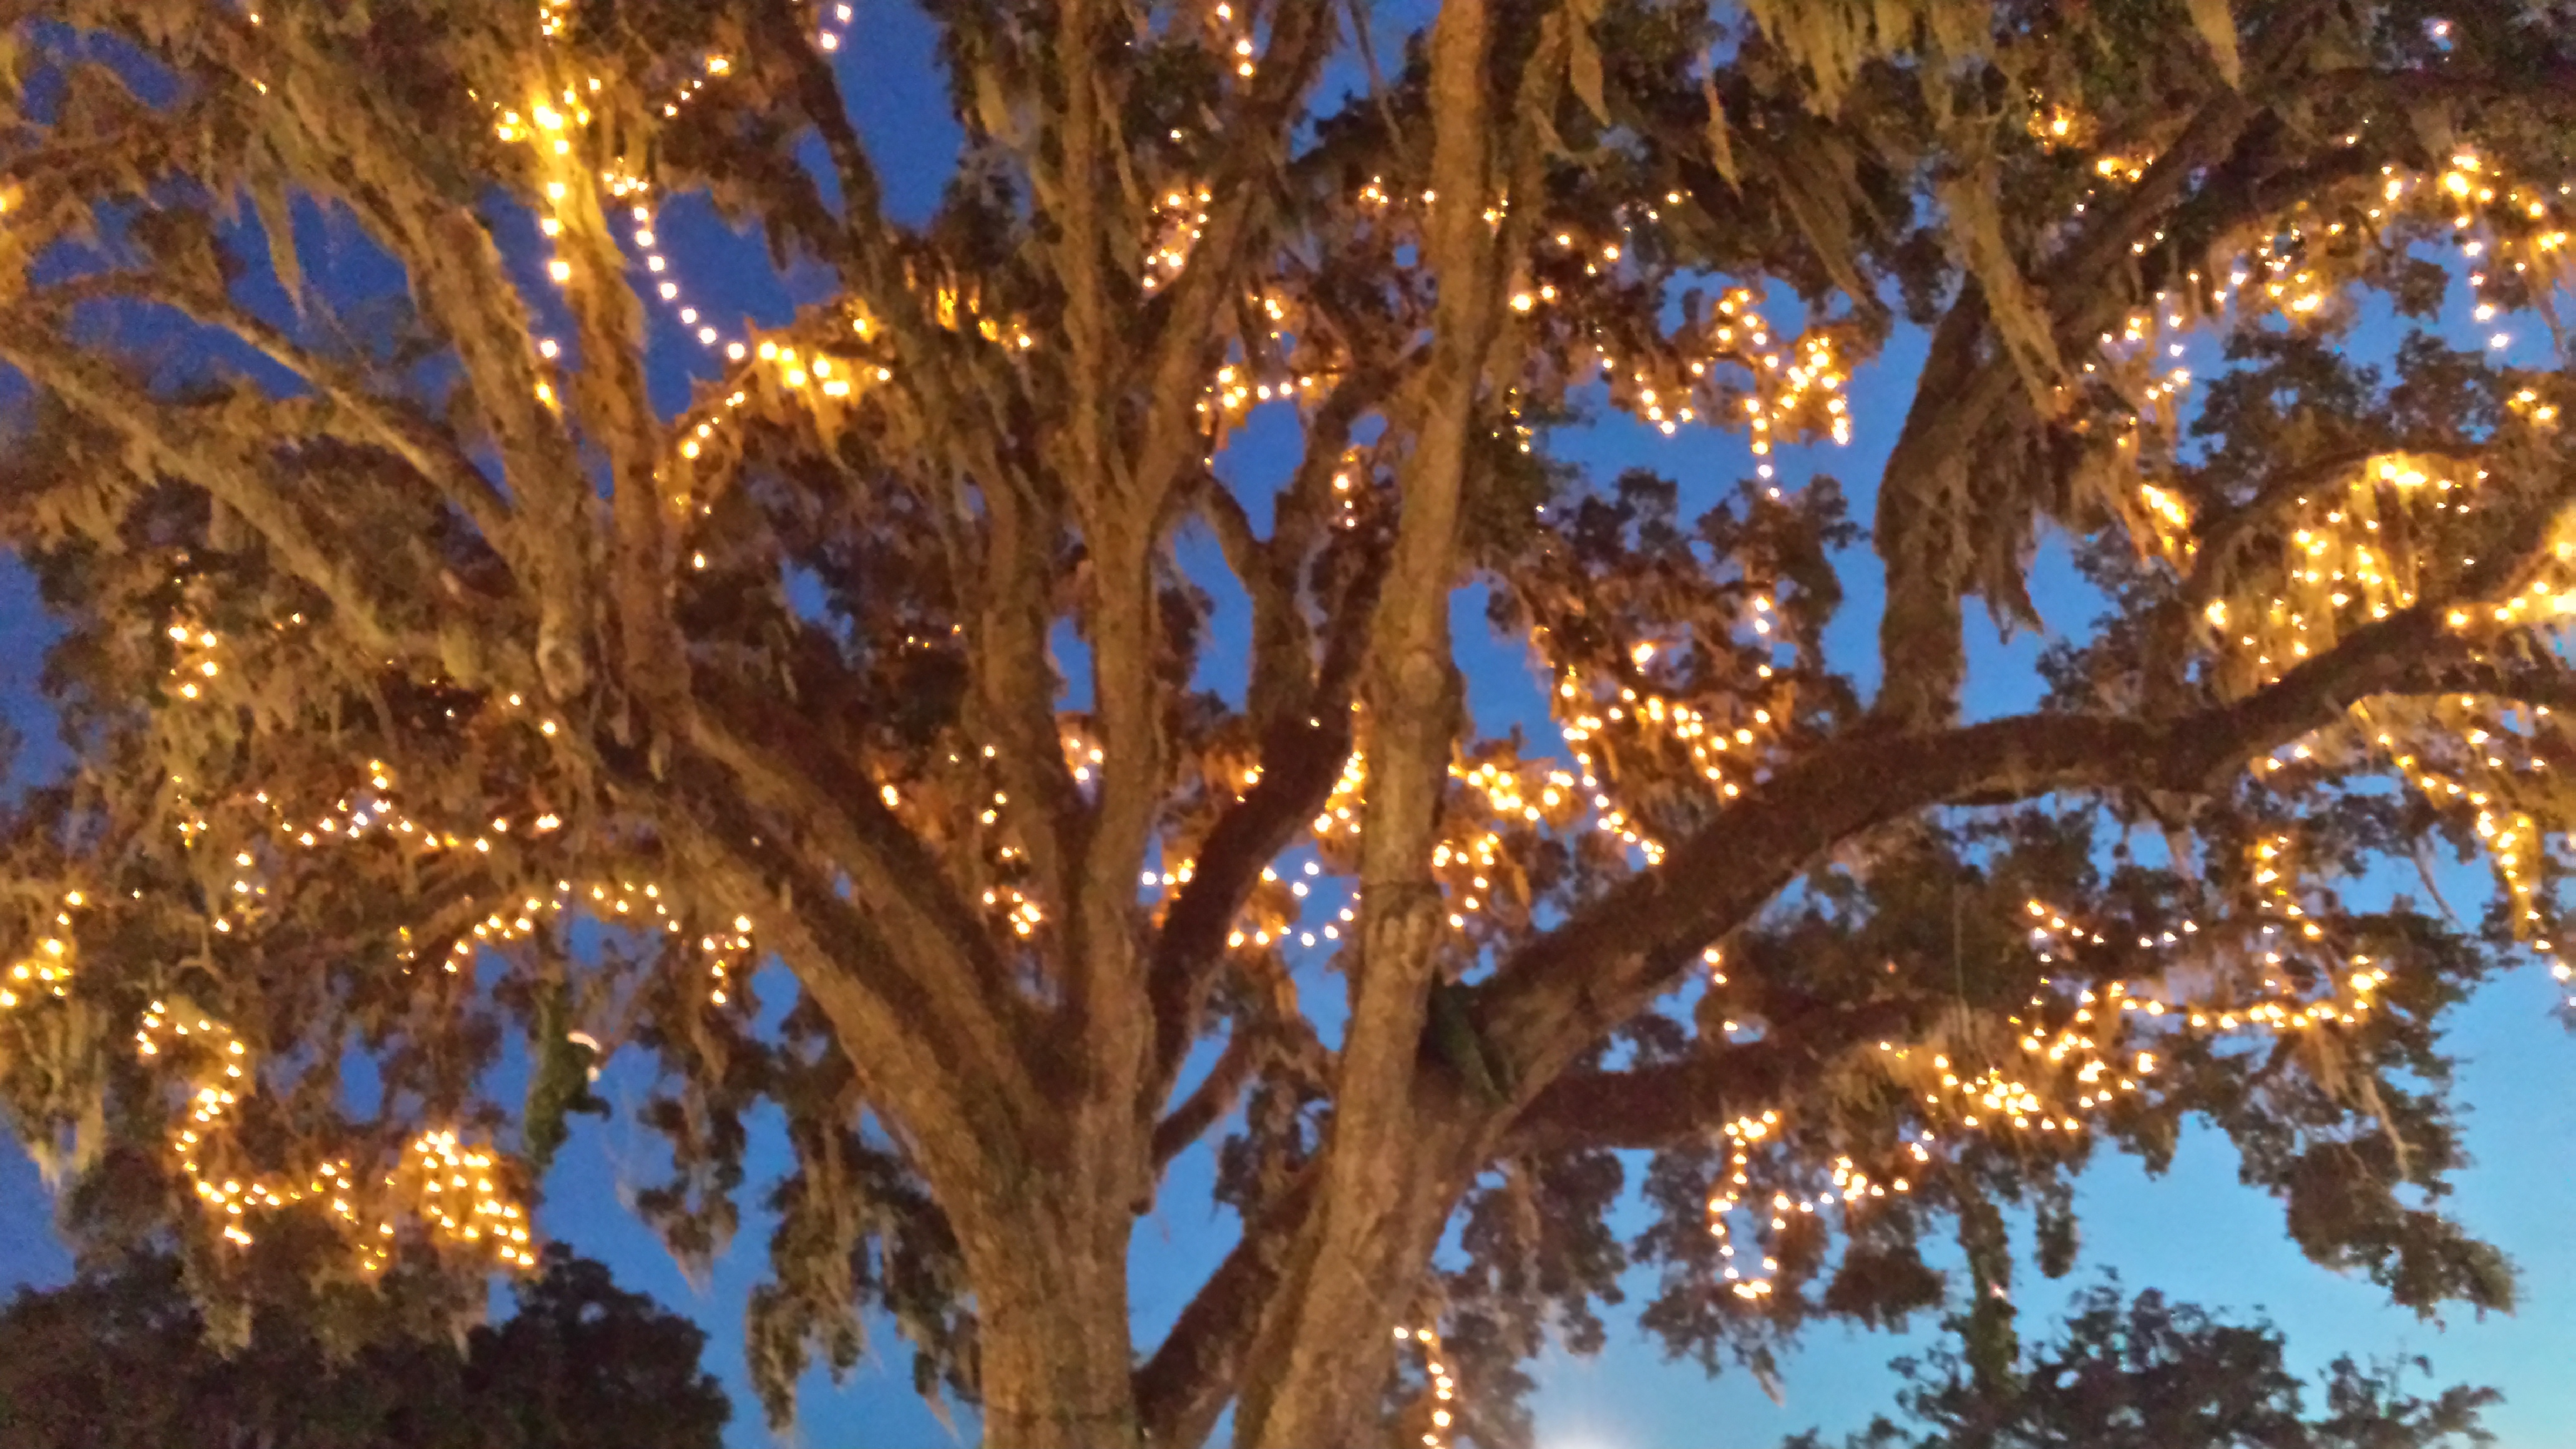 Photo Friday: Oak Tree with Christmas Lights